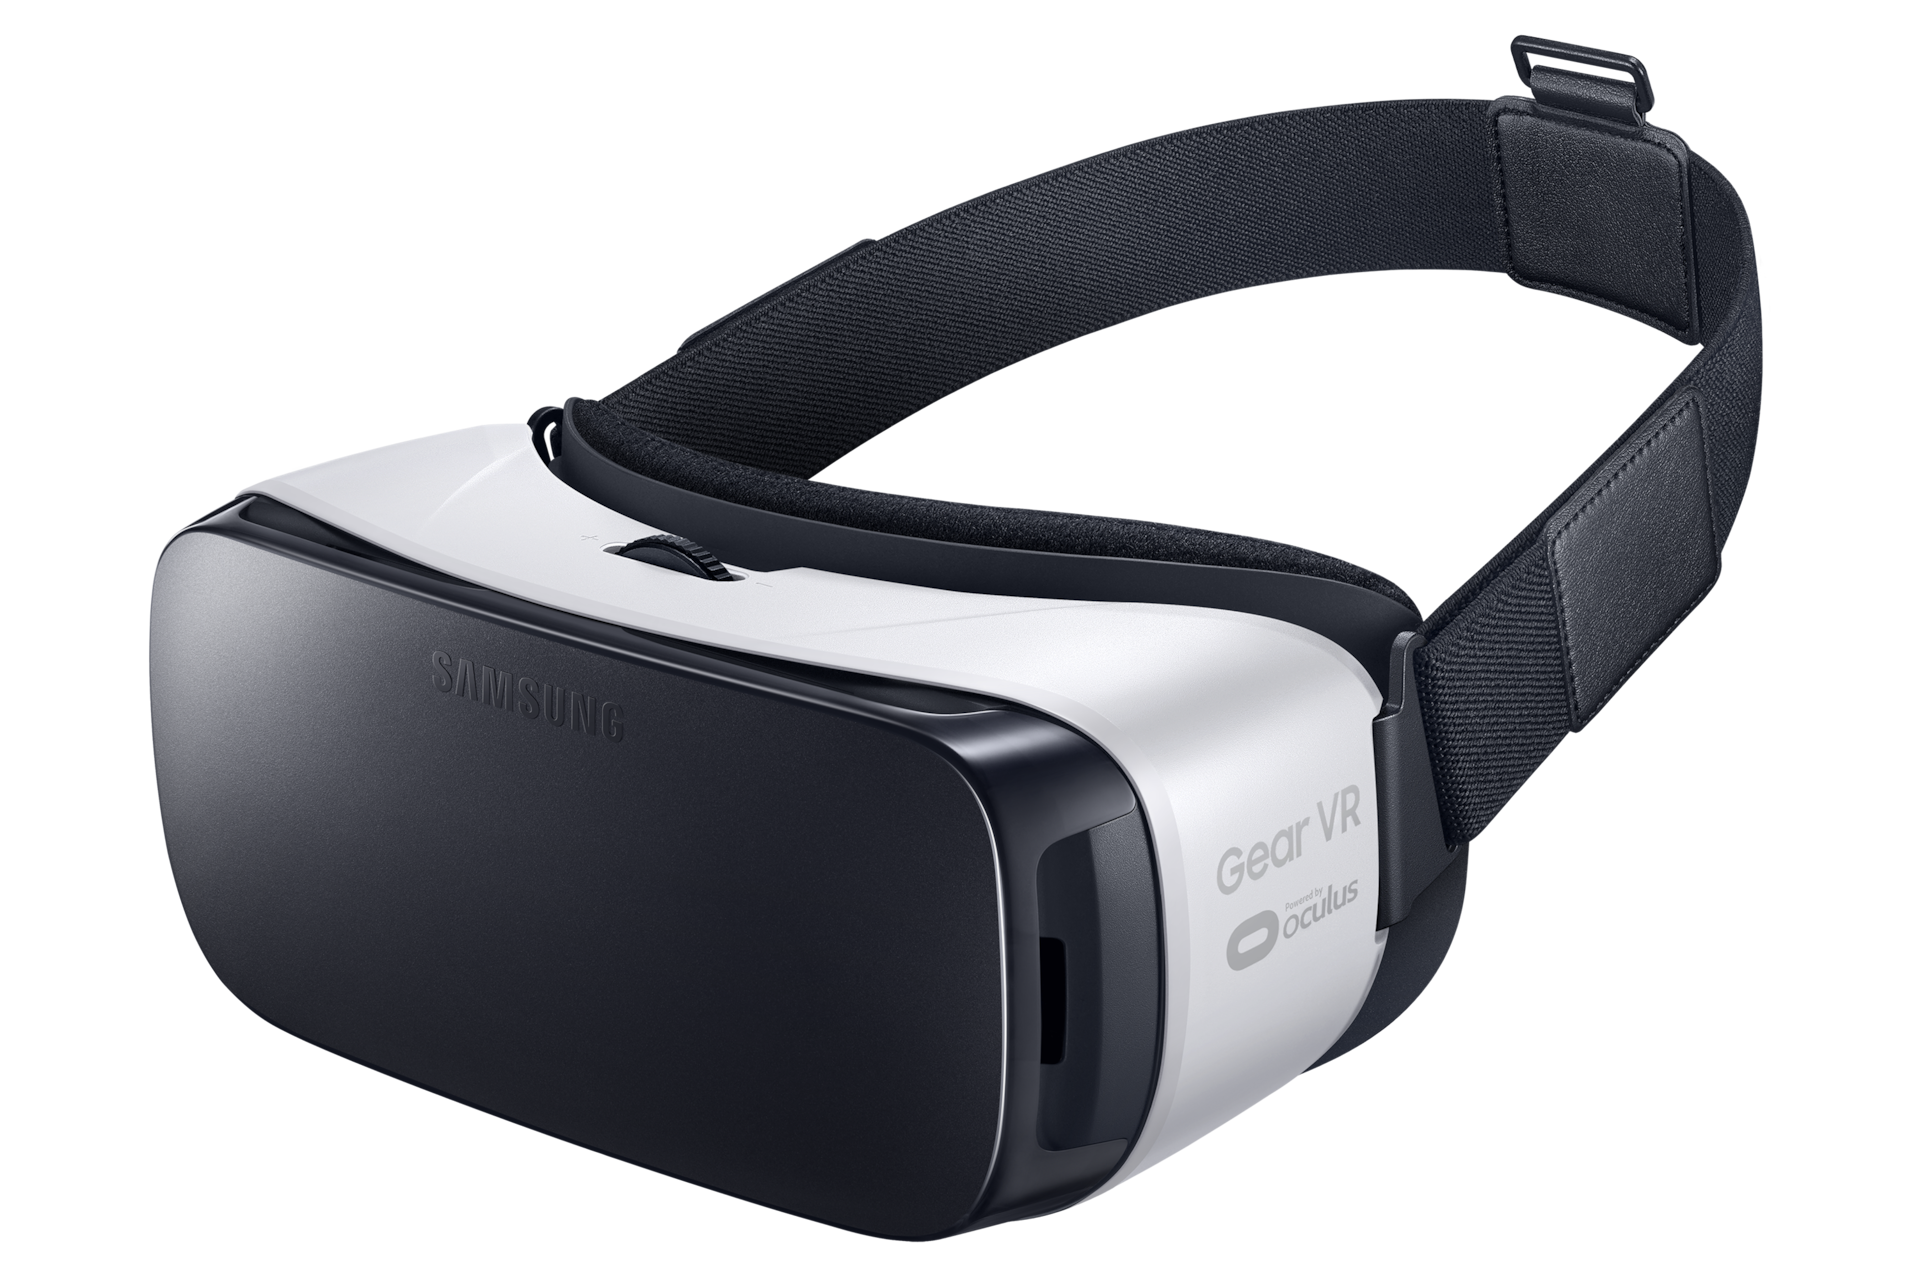 Виар очки реальности. Очки Gear VR Oculus Samsung. Samsung Gear VR r322. Samsung VR SM r322. Samsung Gear VR SM-r324.